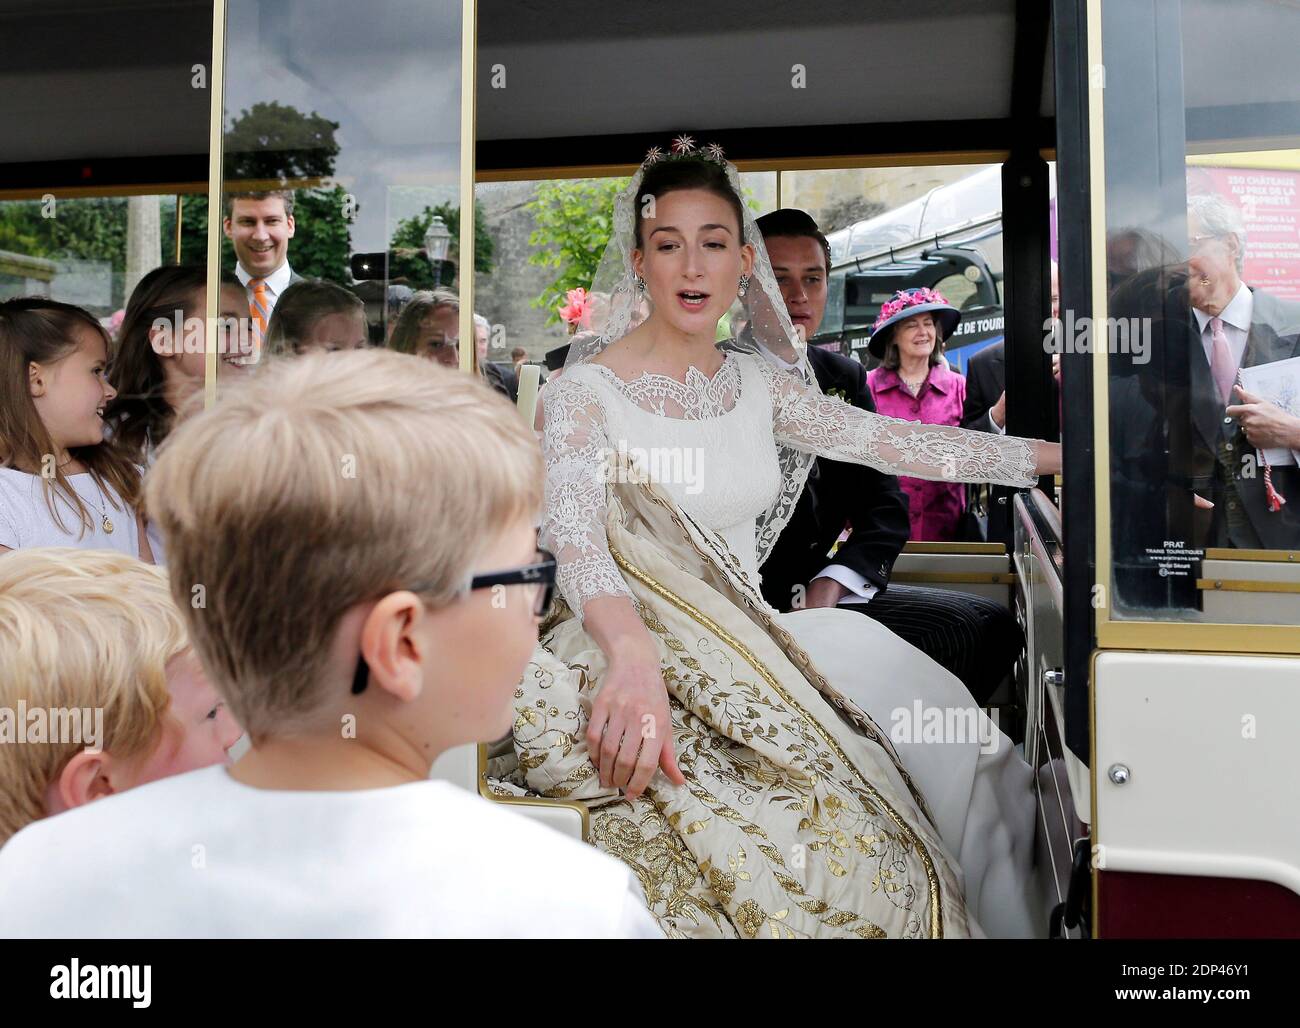 Countess Caroline von Neipperg and Count Philippe de Limburg-Stirum wedding in Saint- Emilion, Southwest France on May 24, 2015. Photo by Bernard-Moritz/ABACAPRESS.COM Stock Photo